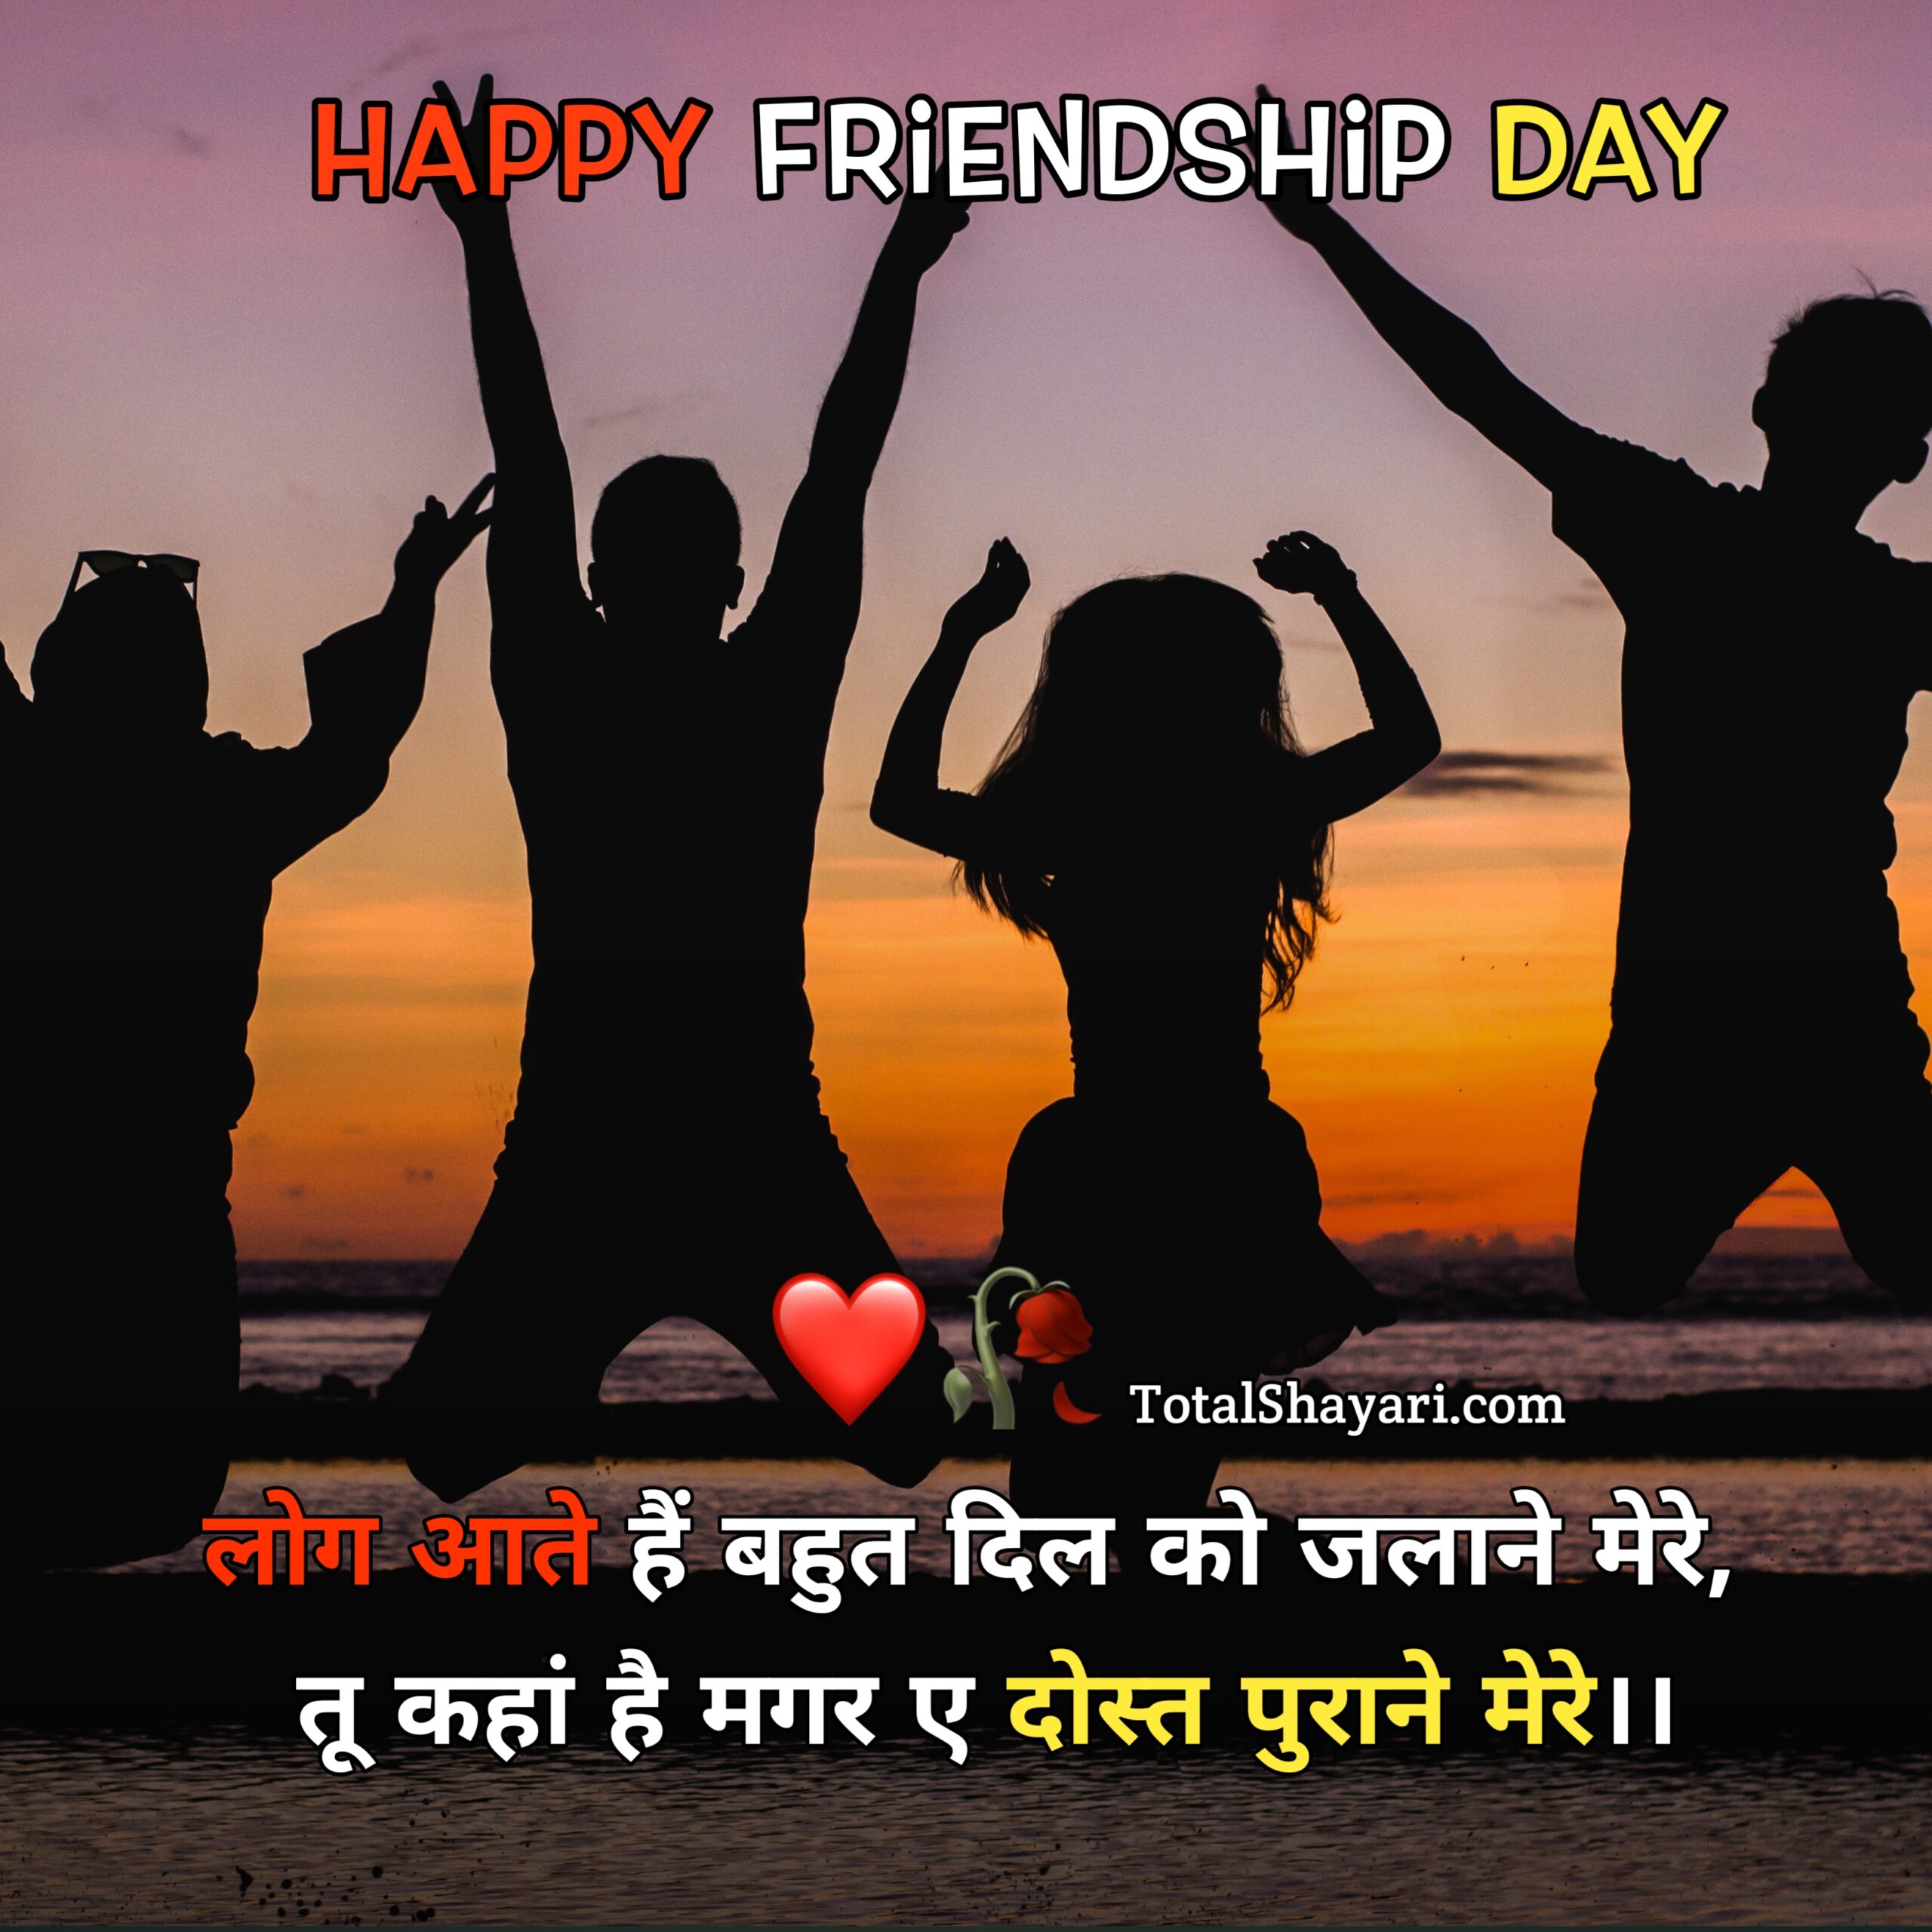 Friendship Day Image 